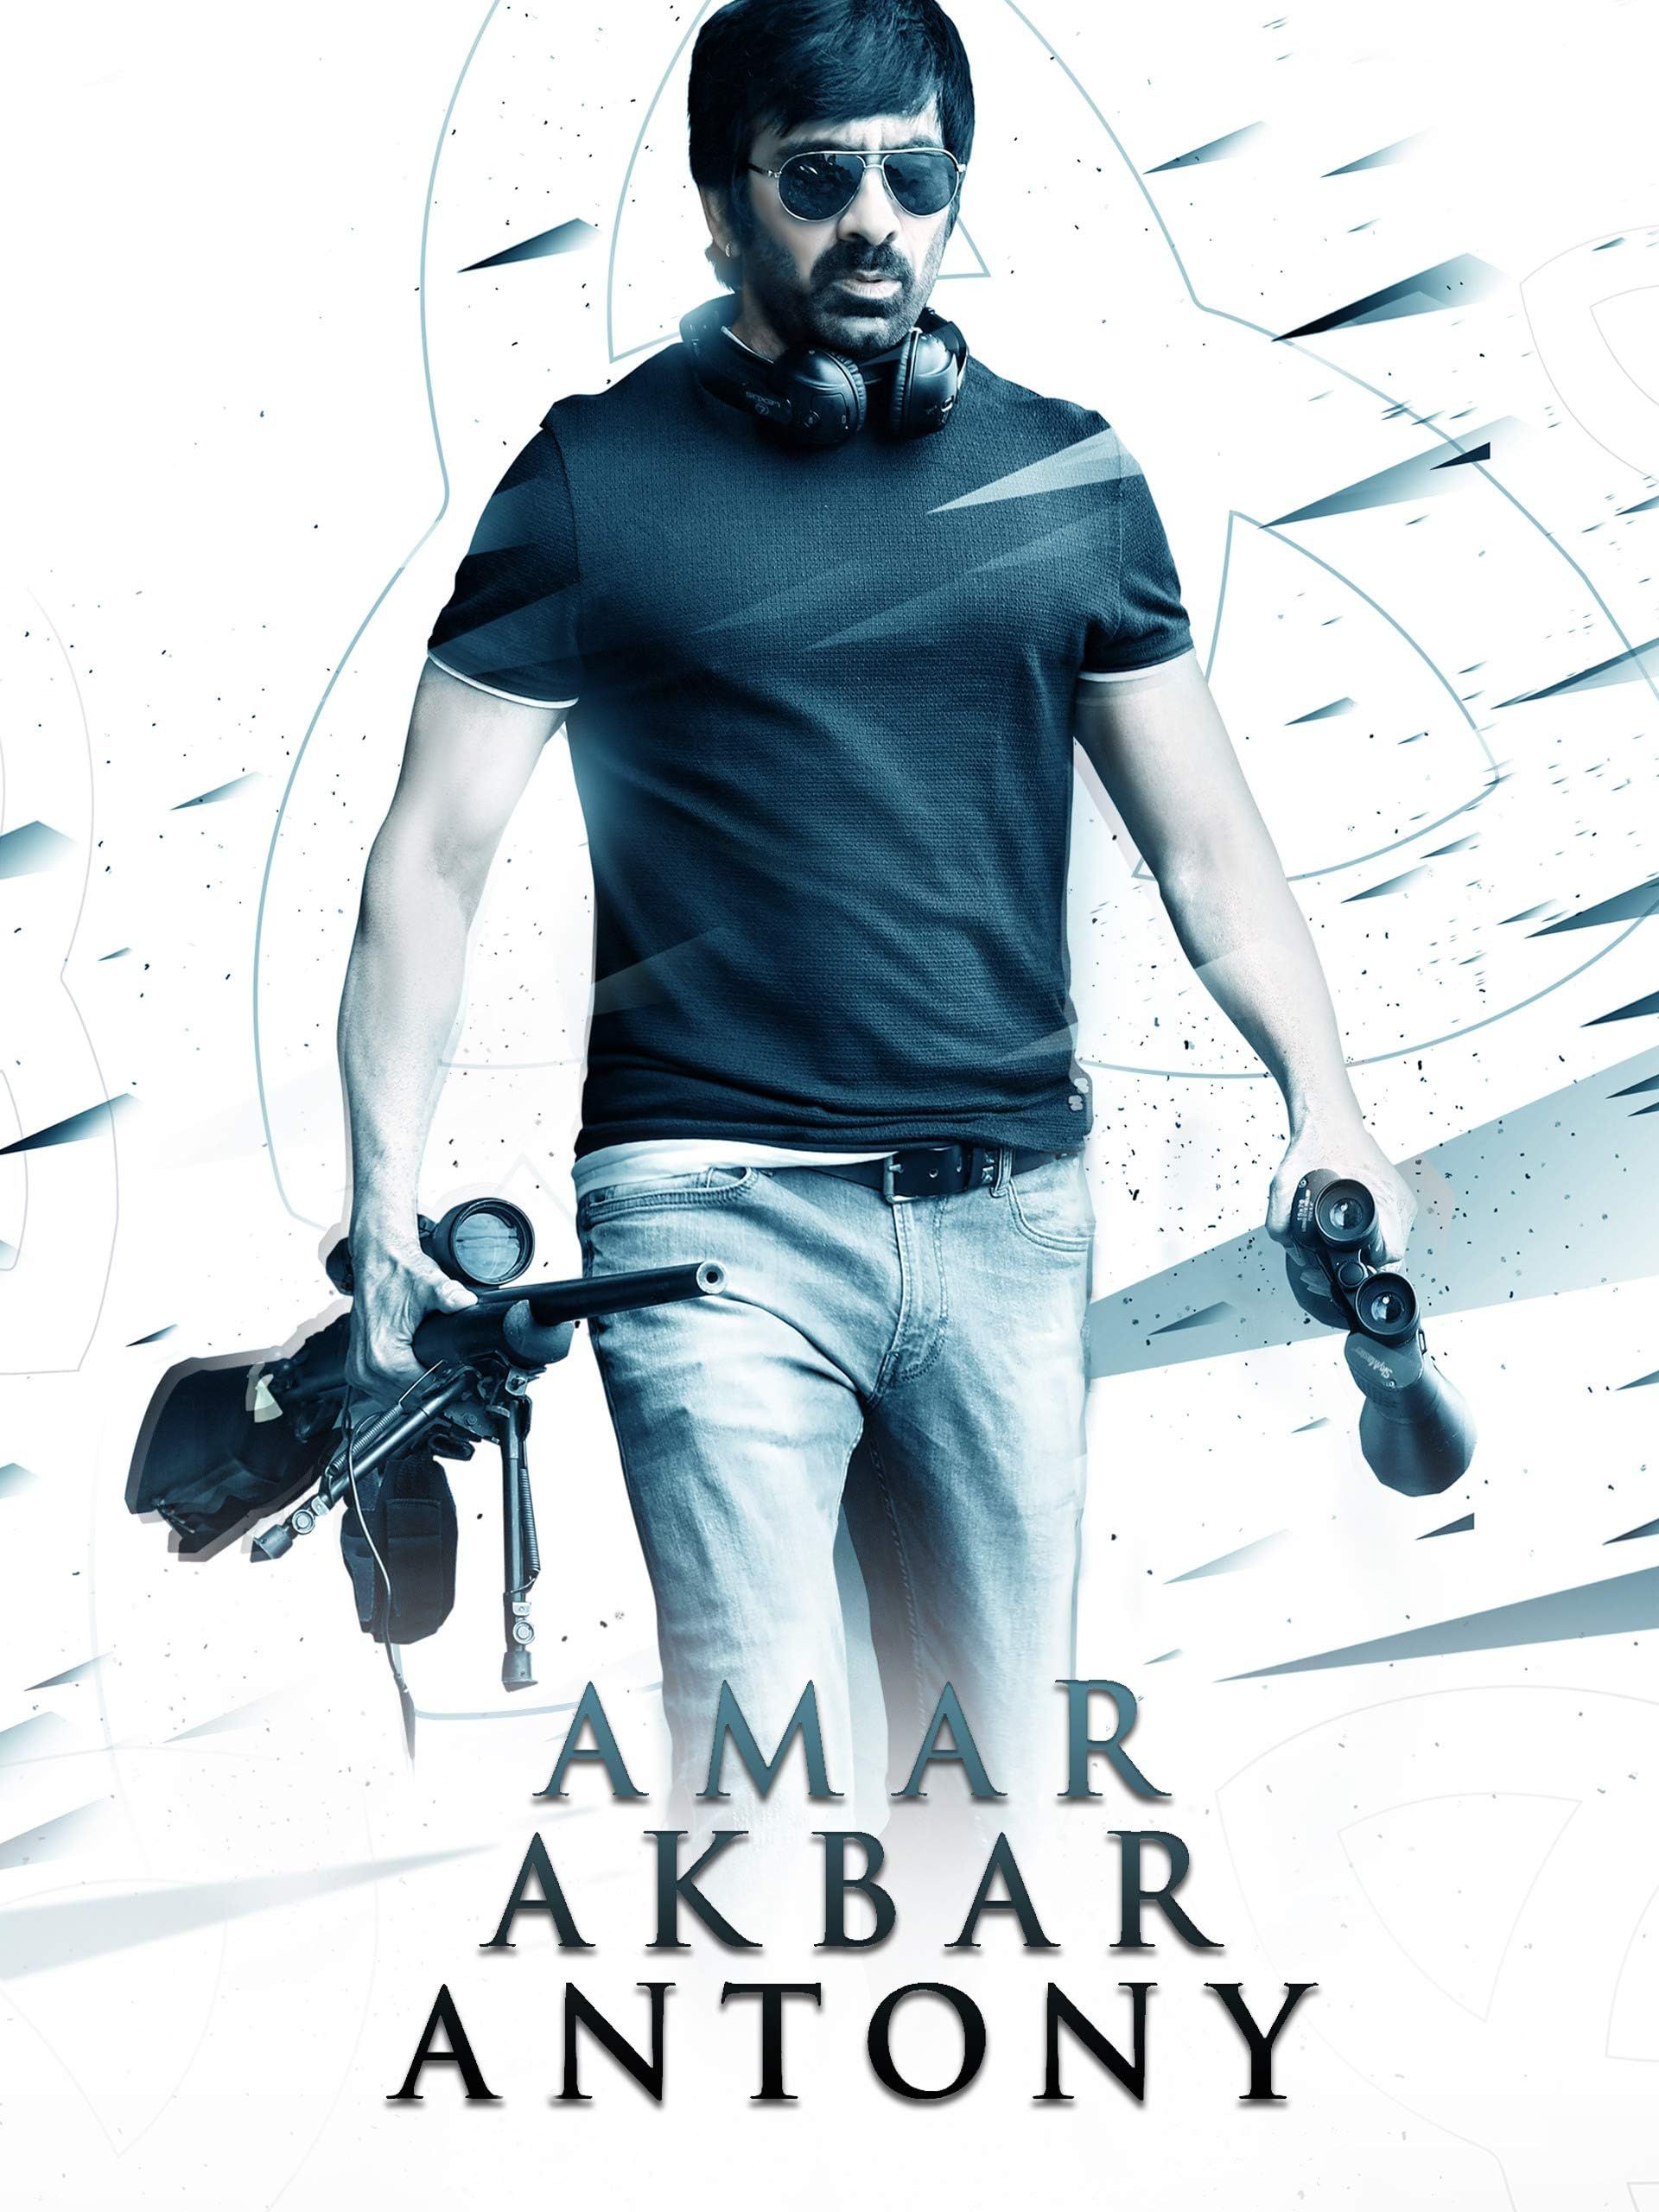 Amar Akbar Anthony (2018) UNCUT Hindi Dubbed Movie download full movie